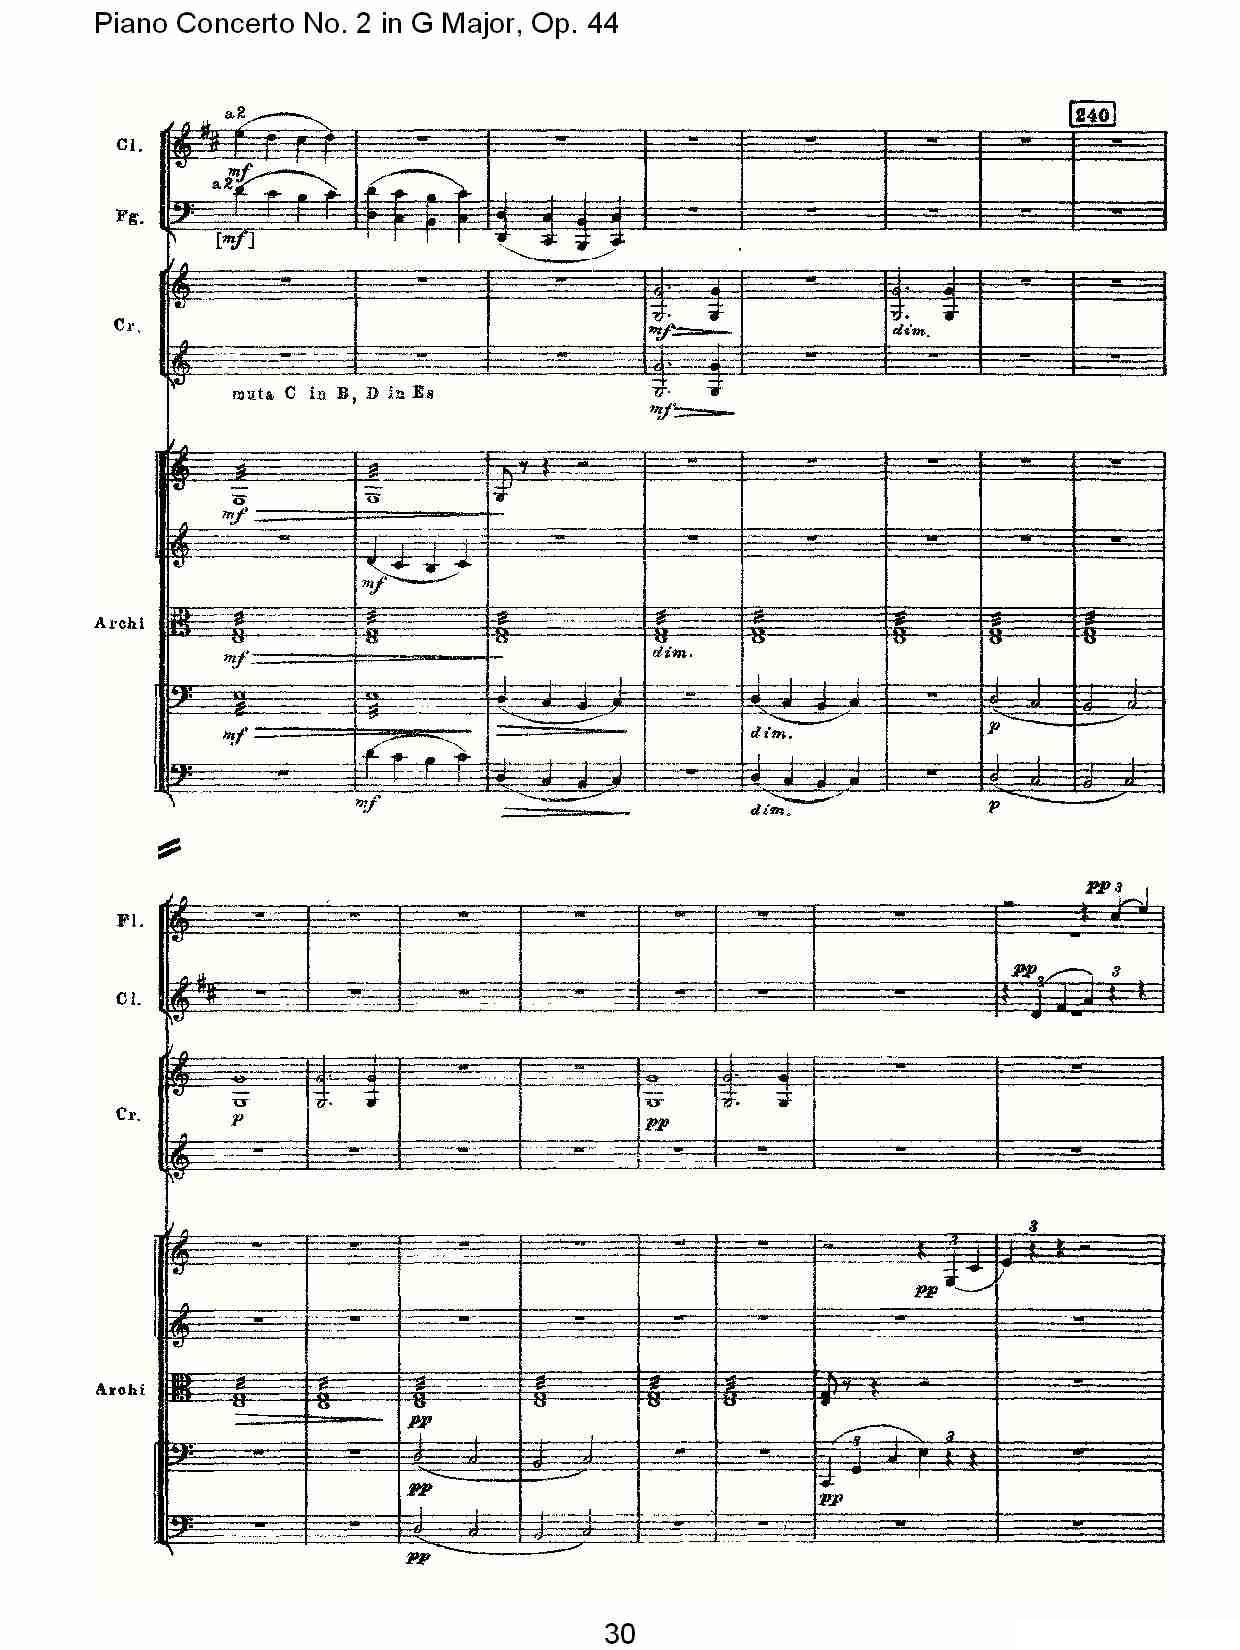 G大调第二钢琴协奏曲, Op.44第一乐章（一）钢琴曲谱（图30）